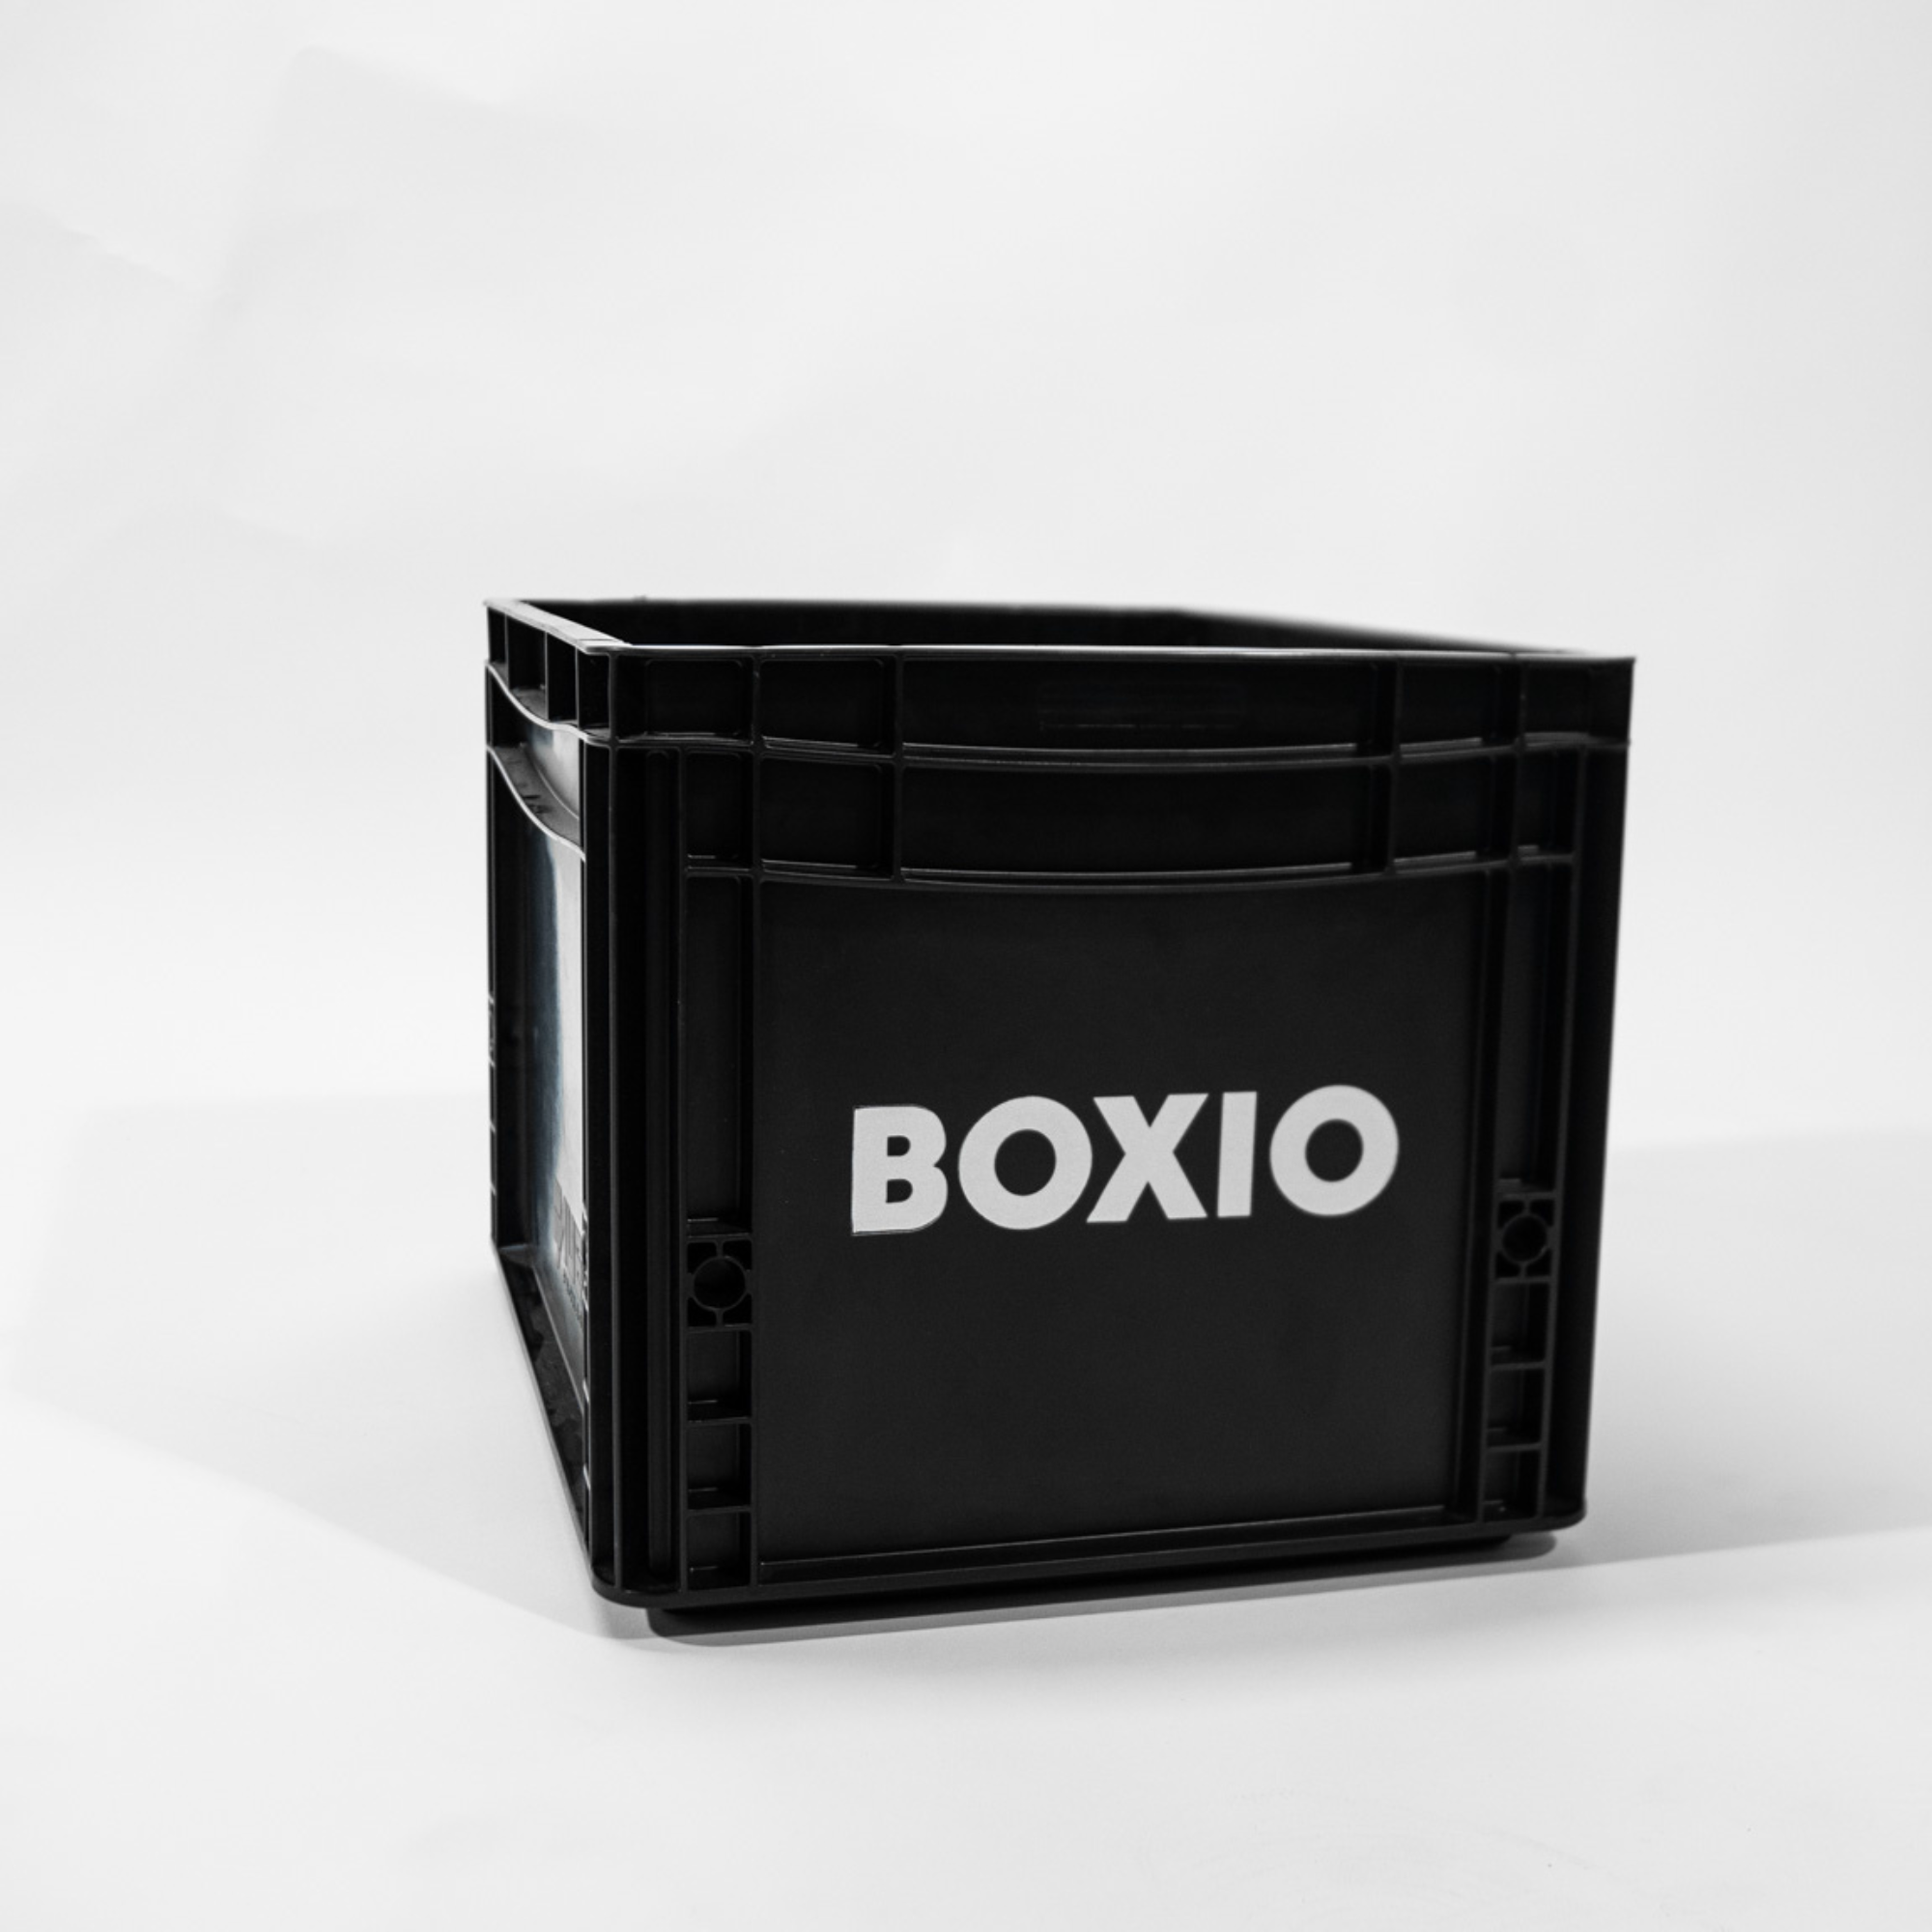 Eurobox "BOXIO" con taladros para BOXIO - TOILET & WASH